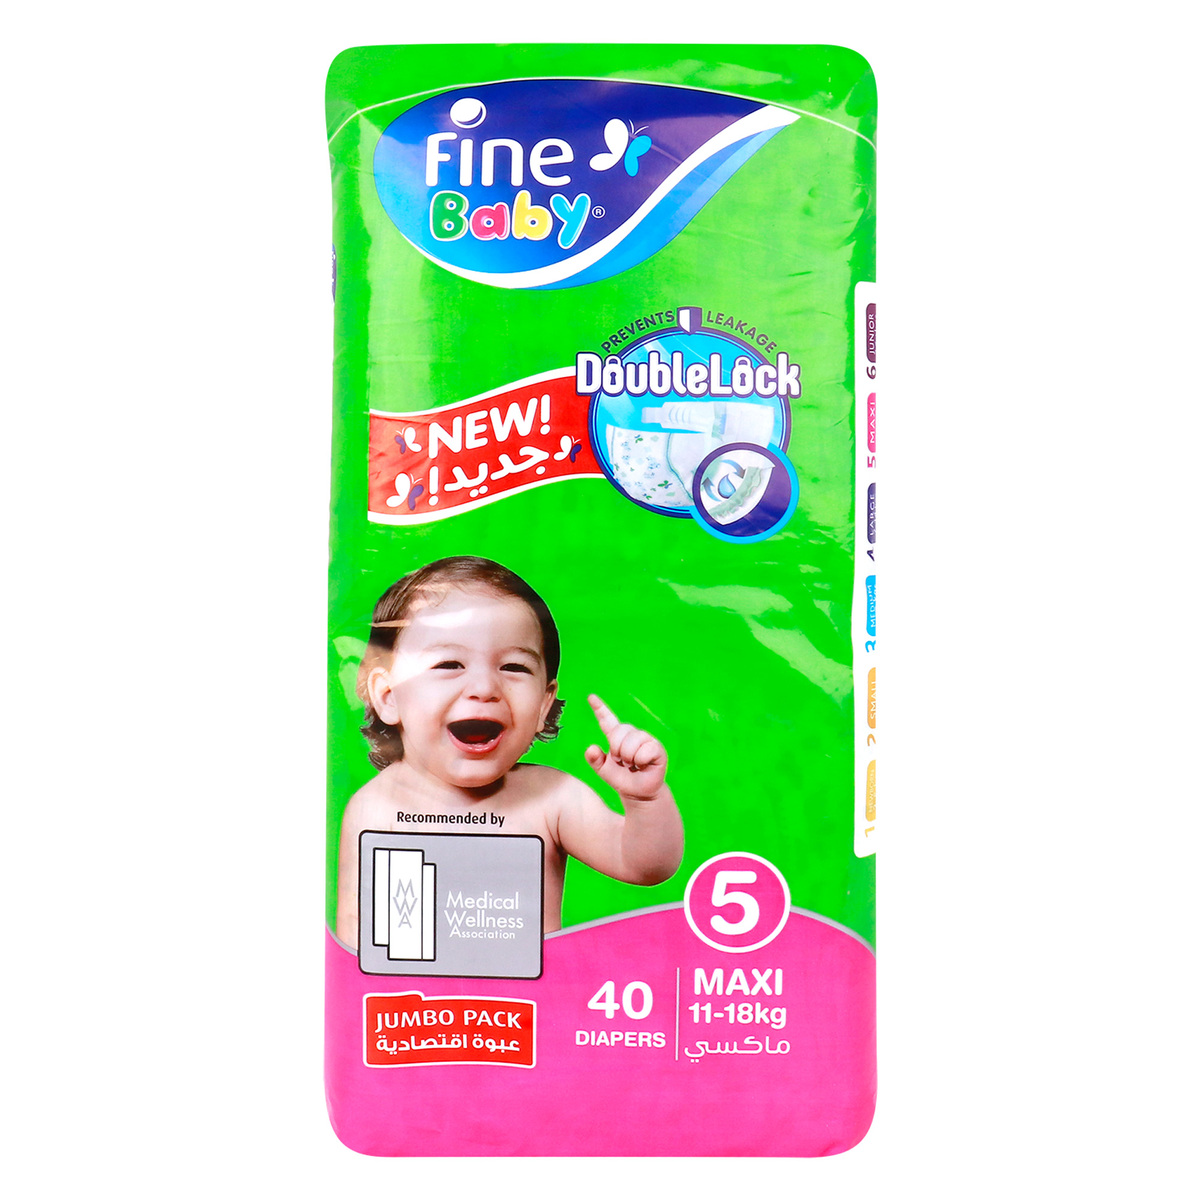 Fine Baby Diaper Size 5 Maxi 11-18kg Jumbo Pack 40pcs